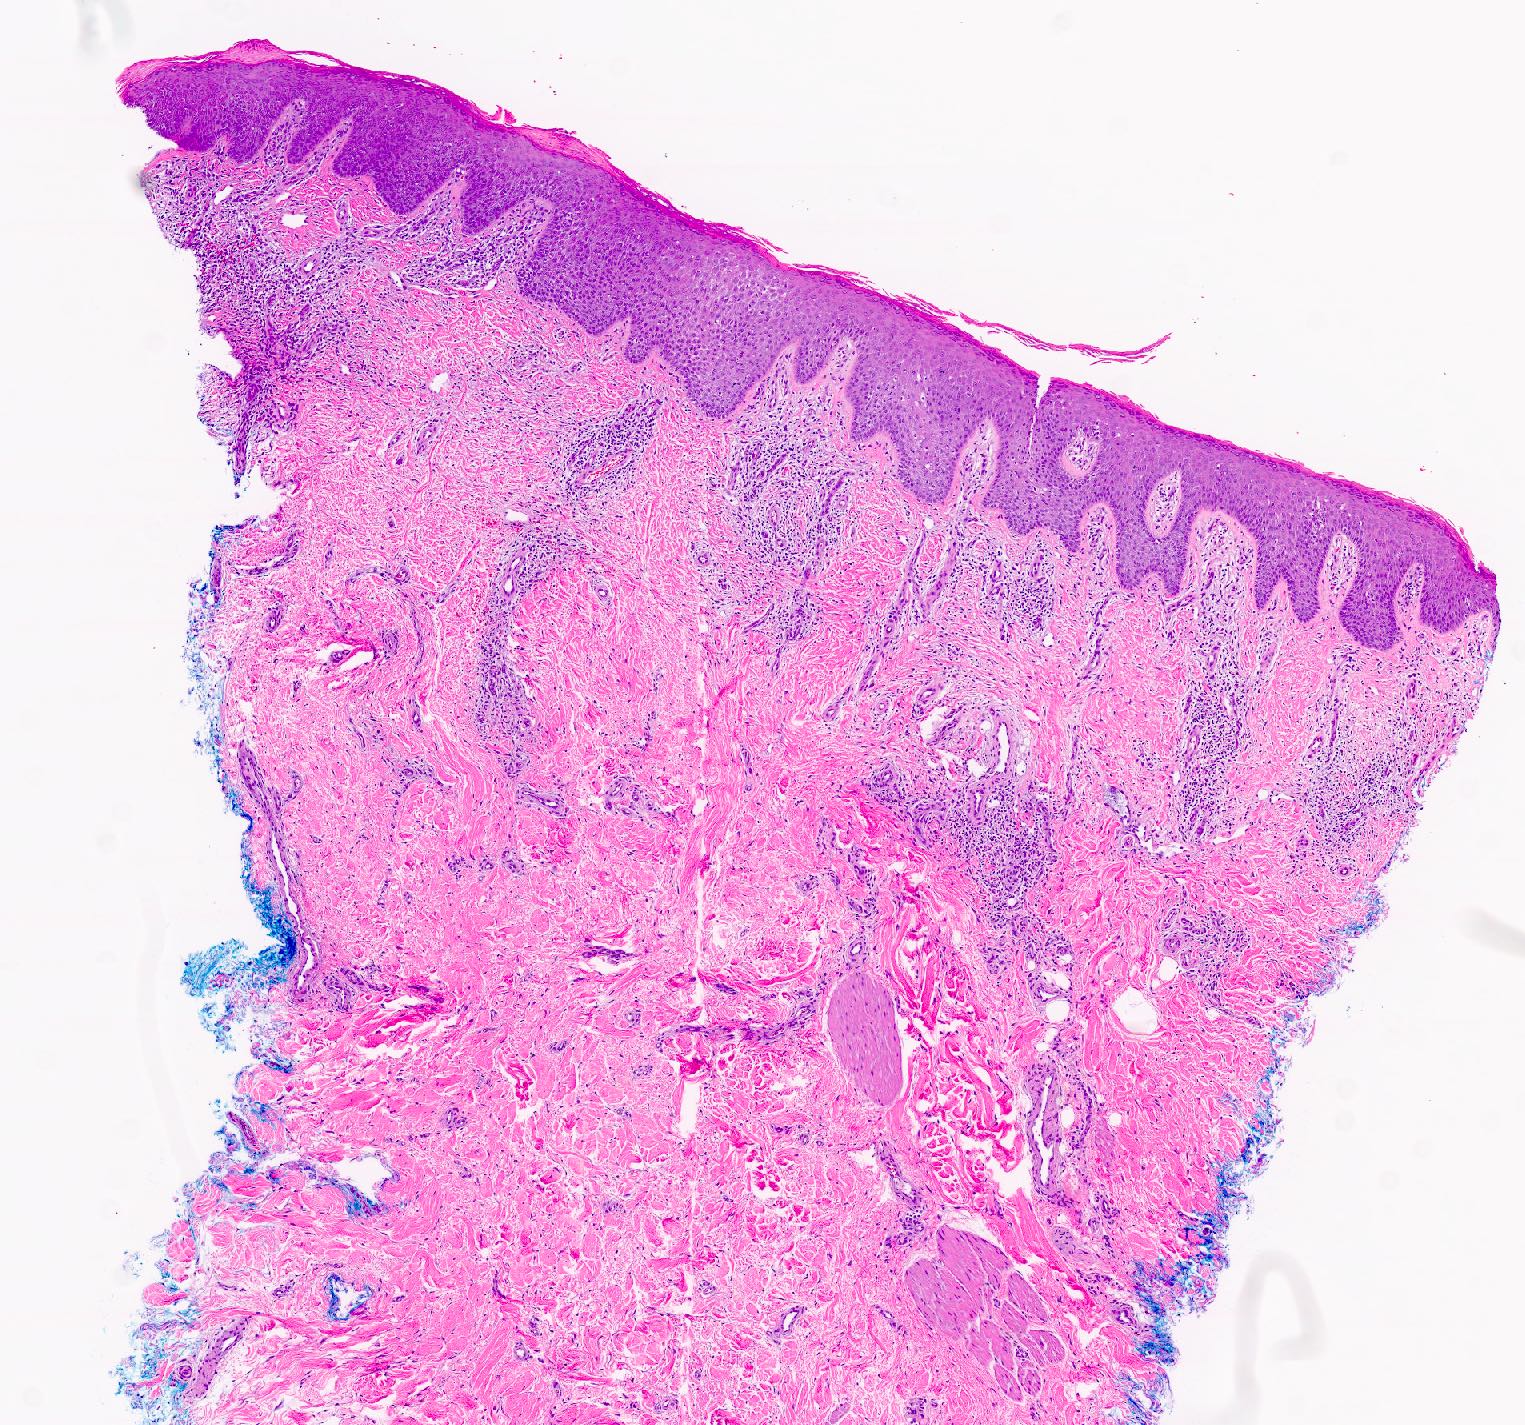 Cutaneous lymphoid hyperplasia simulating mycosis fungoides